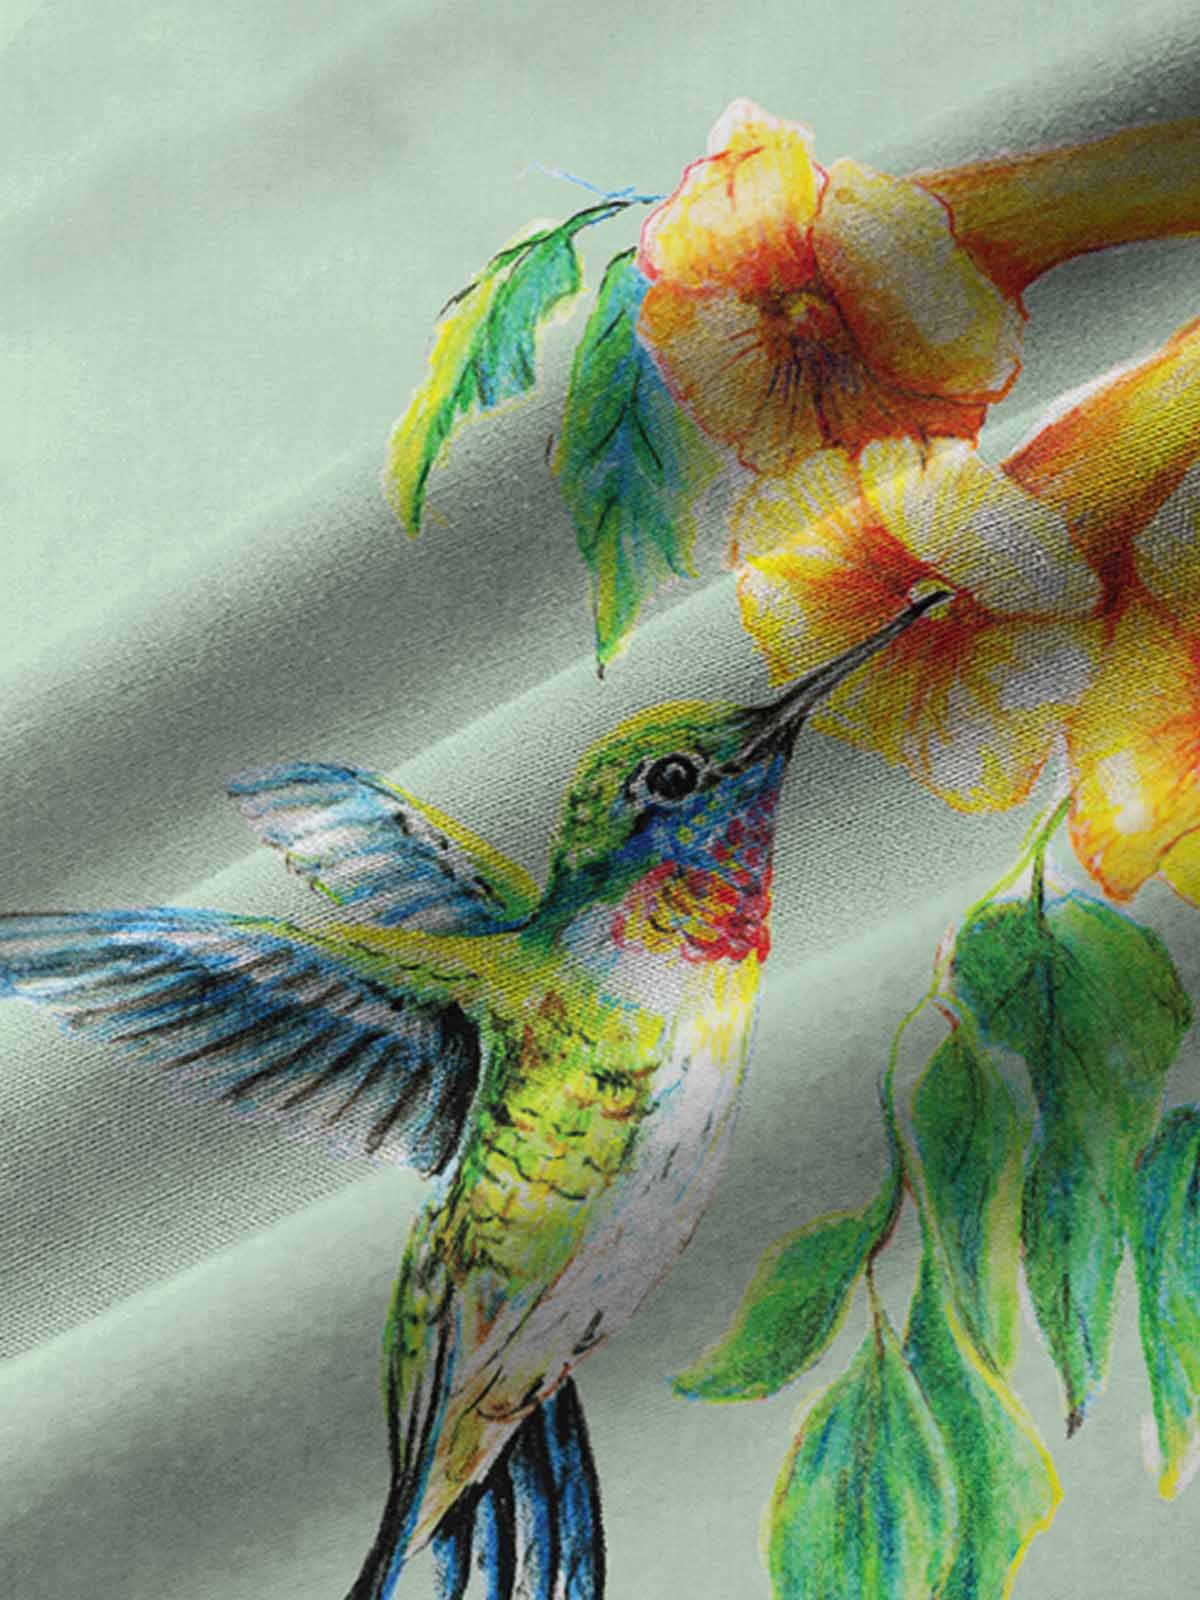 Royaura Waterproof Lily Bird Hawaiian Shirt  Stain-Resistant Hydrophobic Anti-Dirty